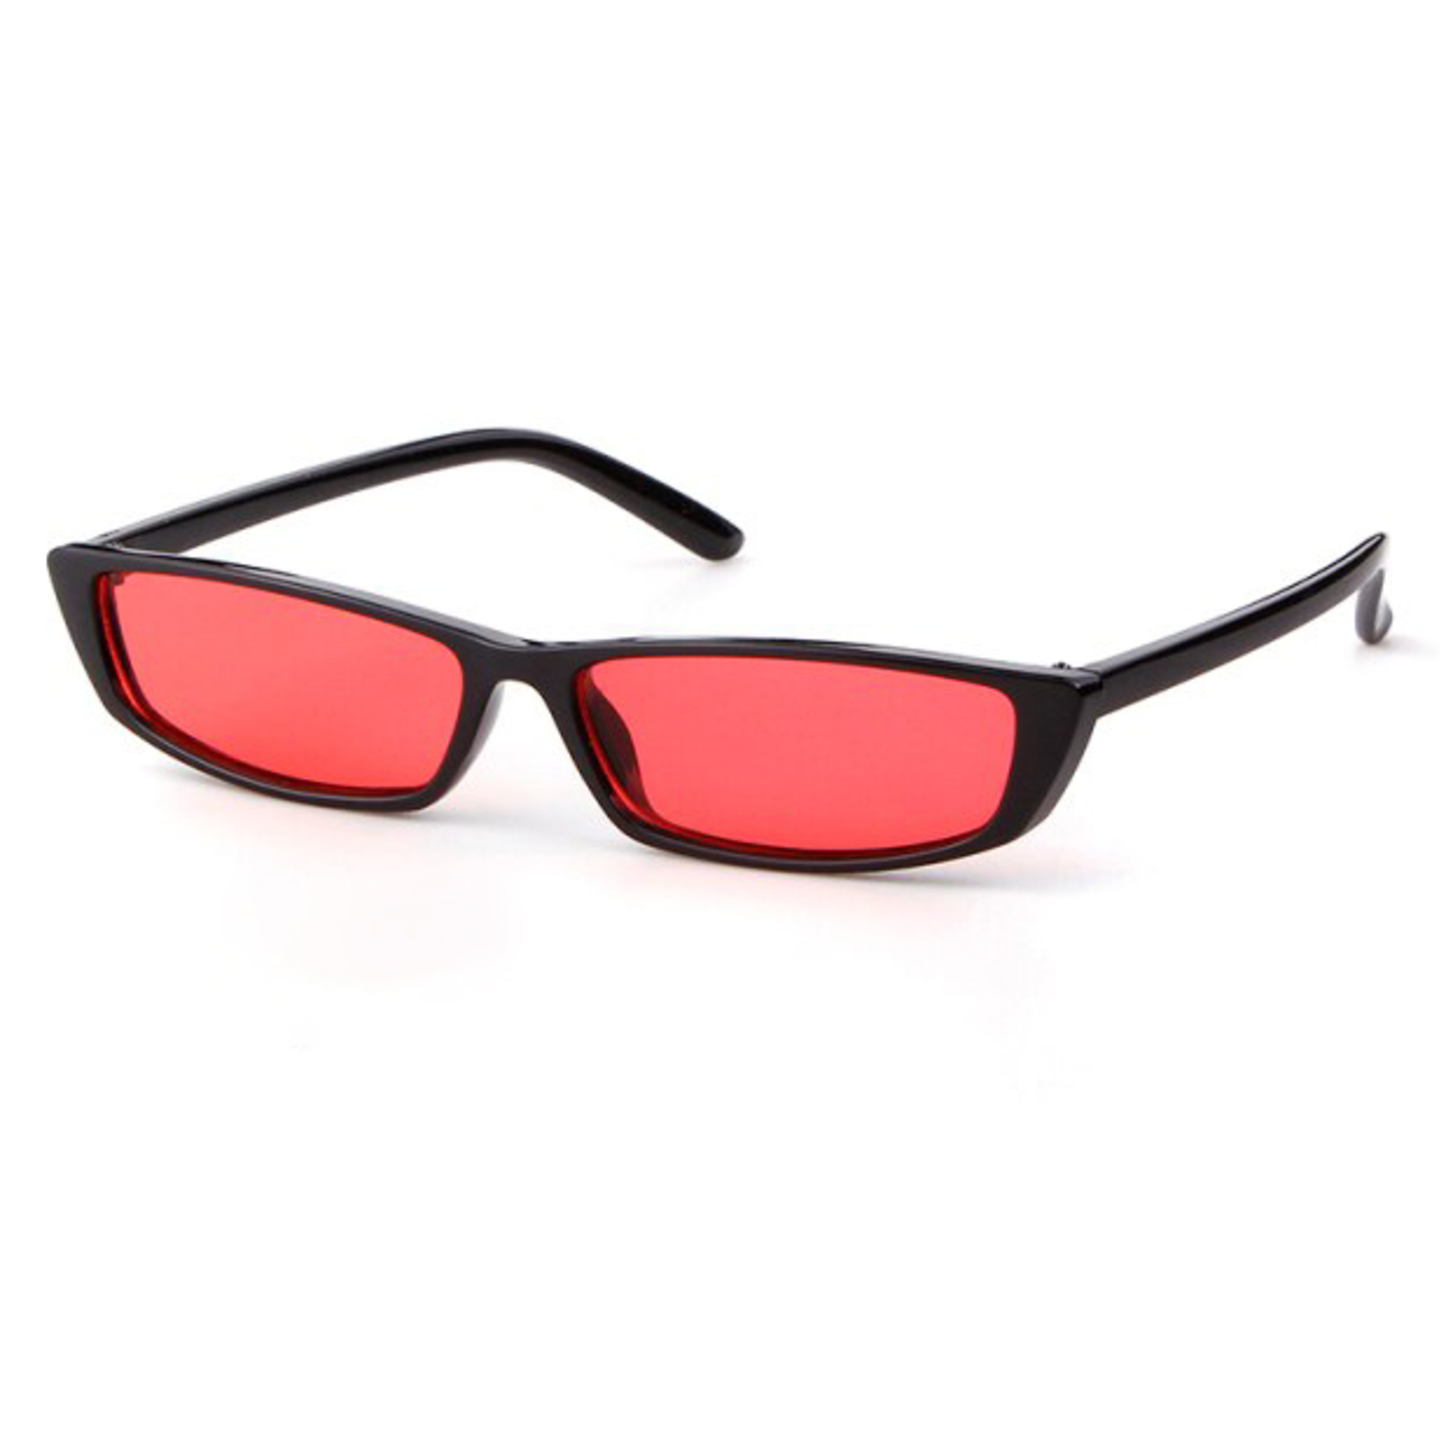 Black Full Rim Red Colored Sunglasses  Limited Addition